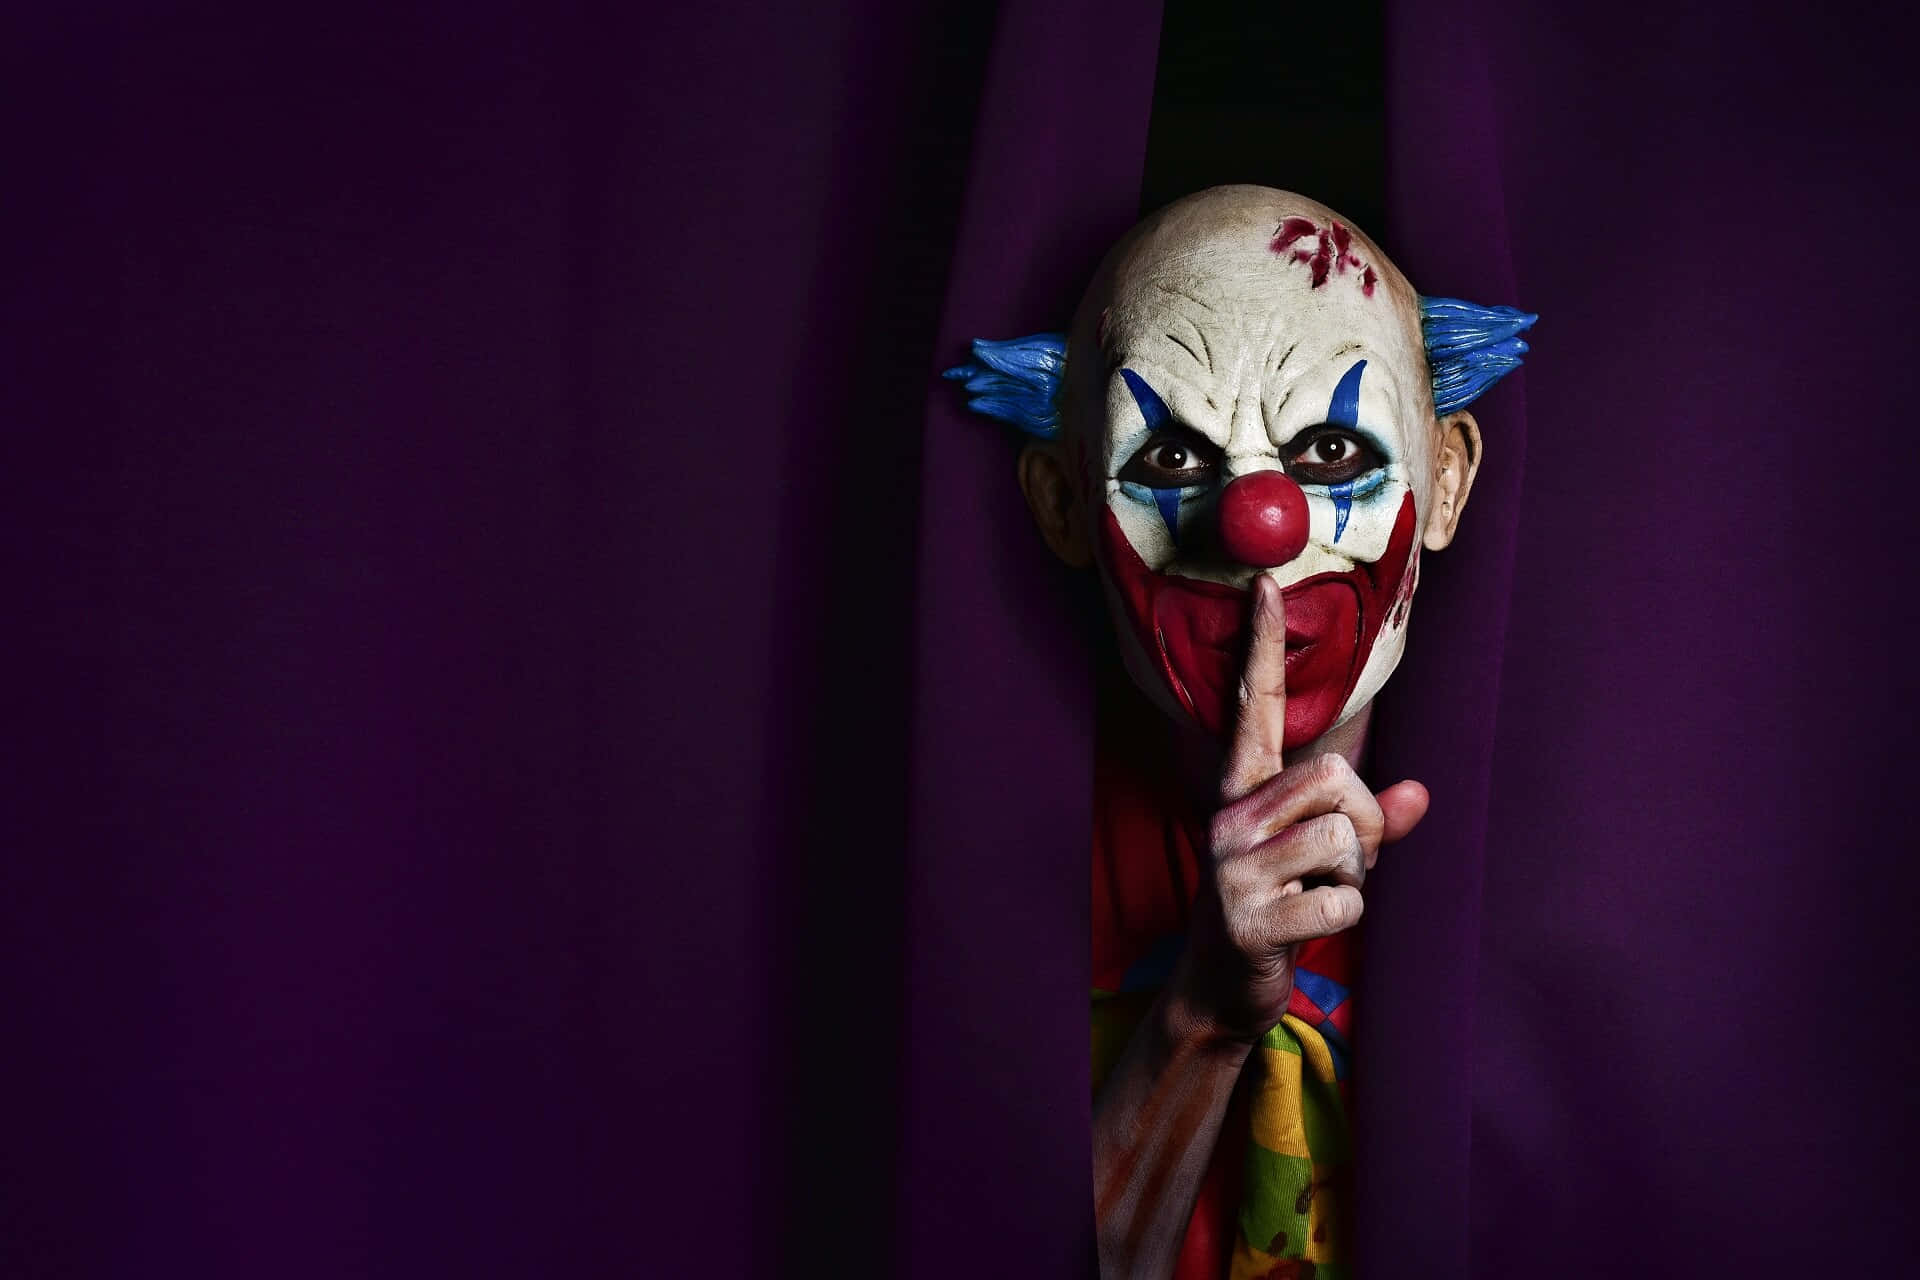 a clown peeking out of a purple curtain